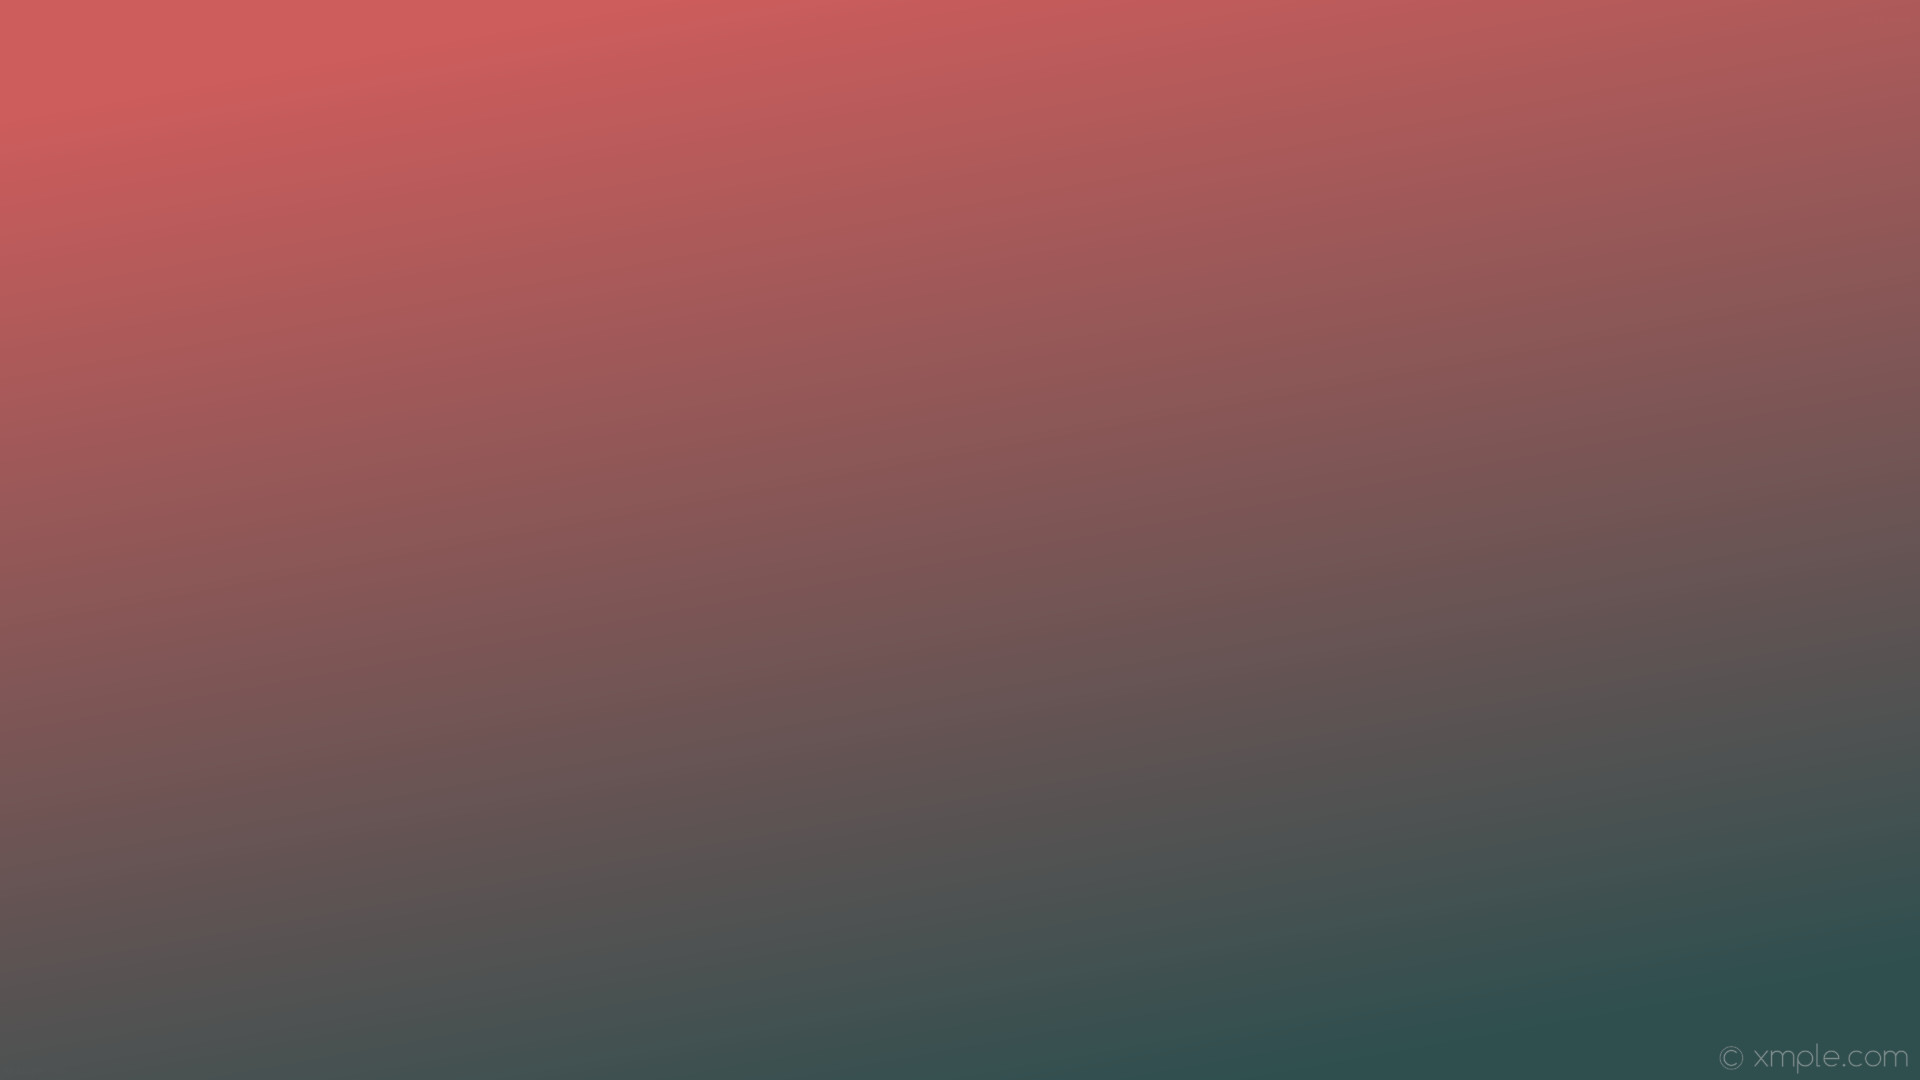 wallpaper linear red grey gradient indian red dark slate gray #cd5c5c  #2f4f4f 120Â°